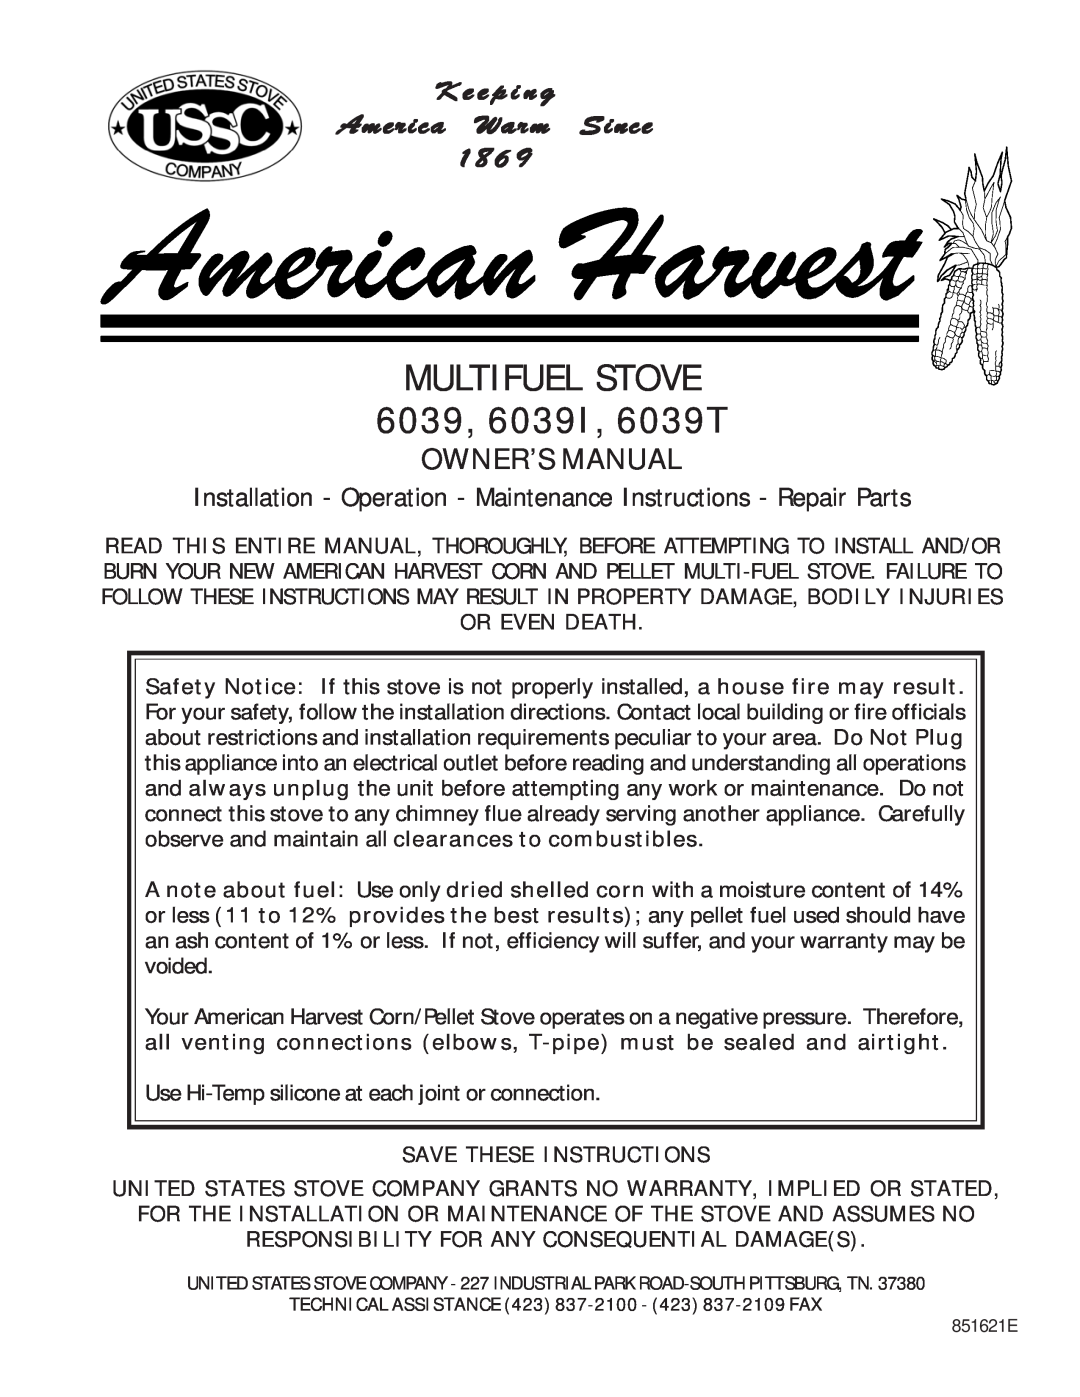 United States Stove owner manual Multifuel Stove, 6039, 6039I, 6039T, K e e p i n g America Warm Since 